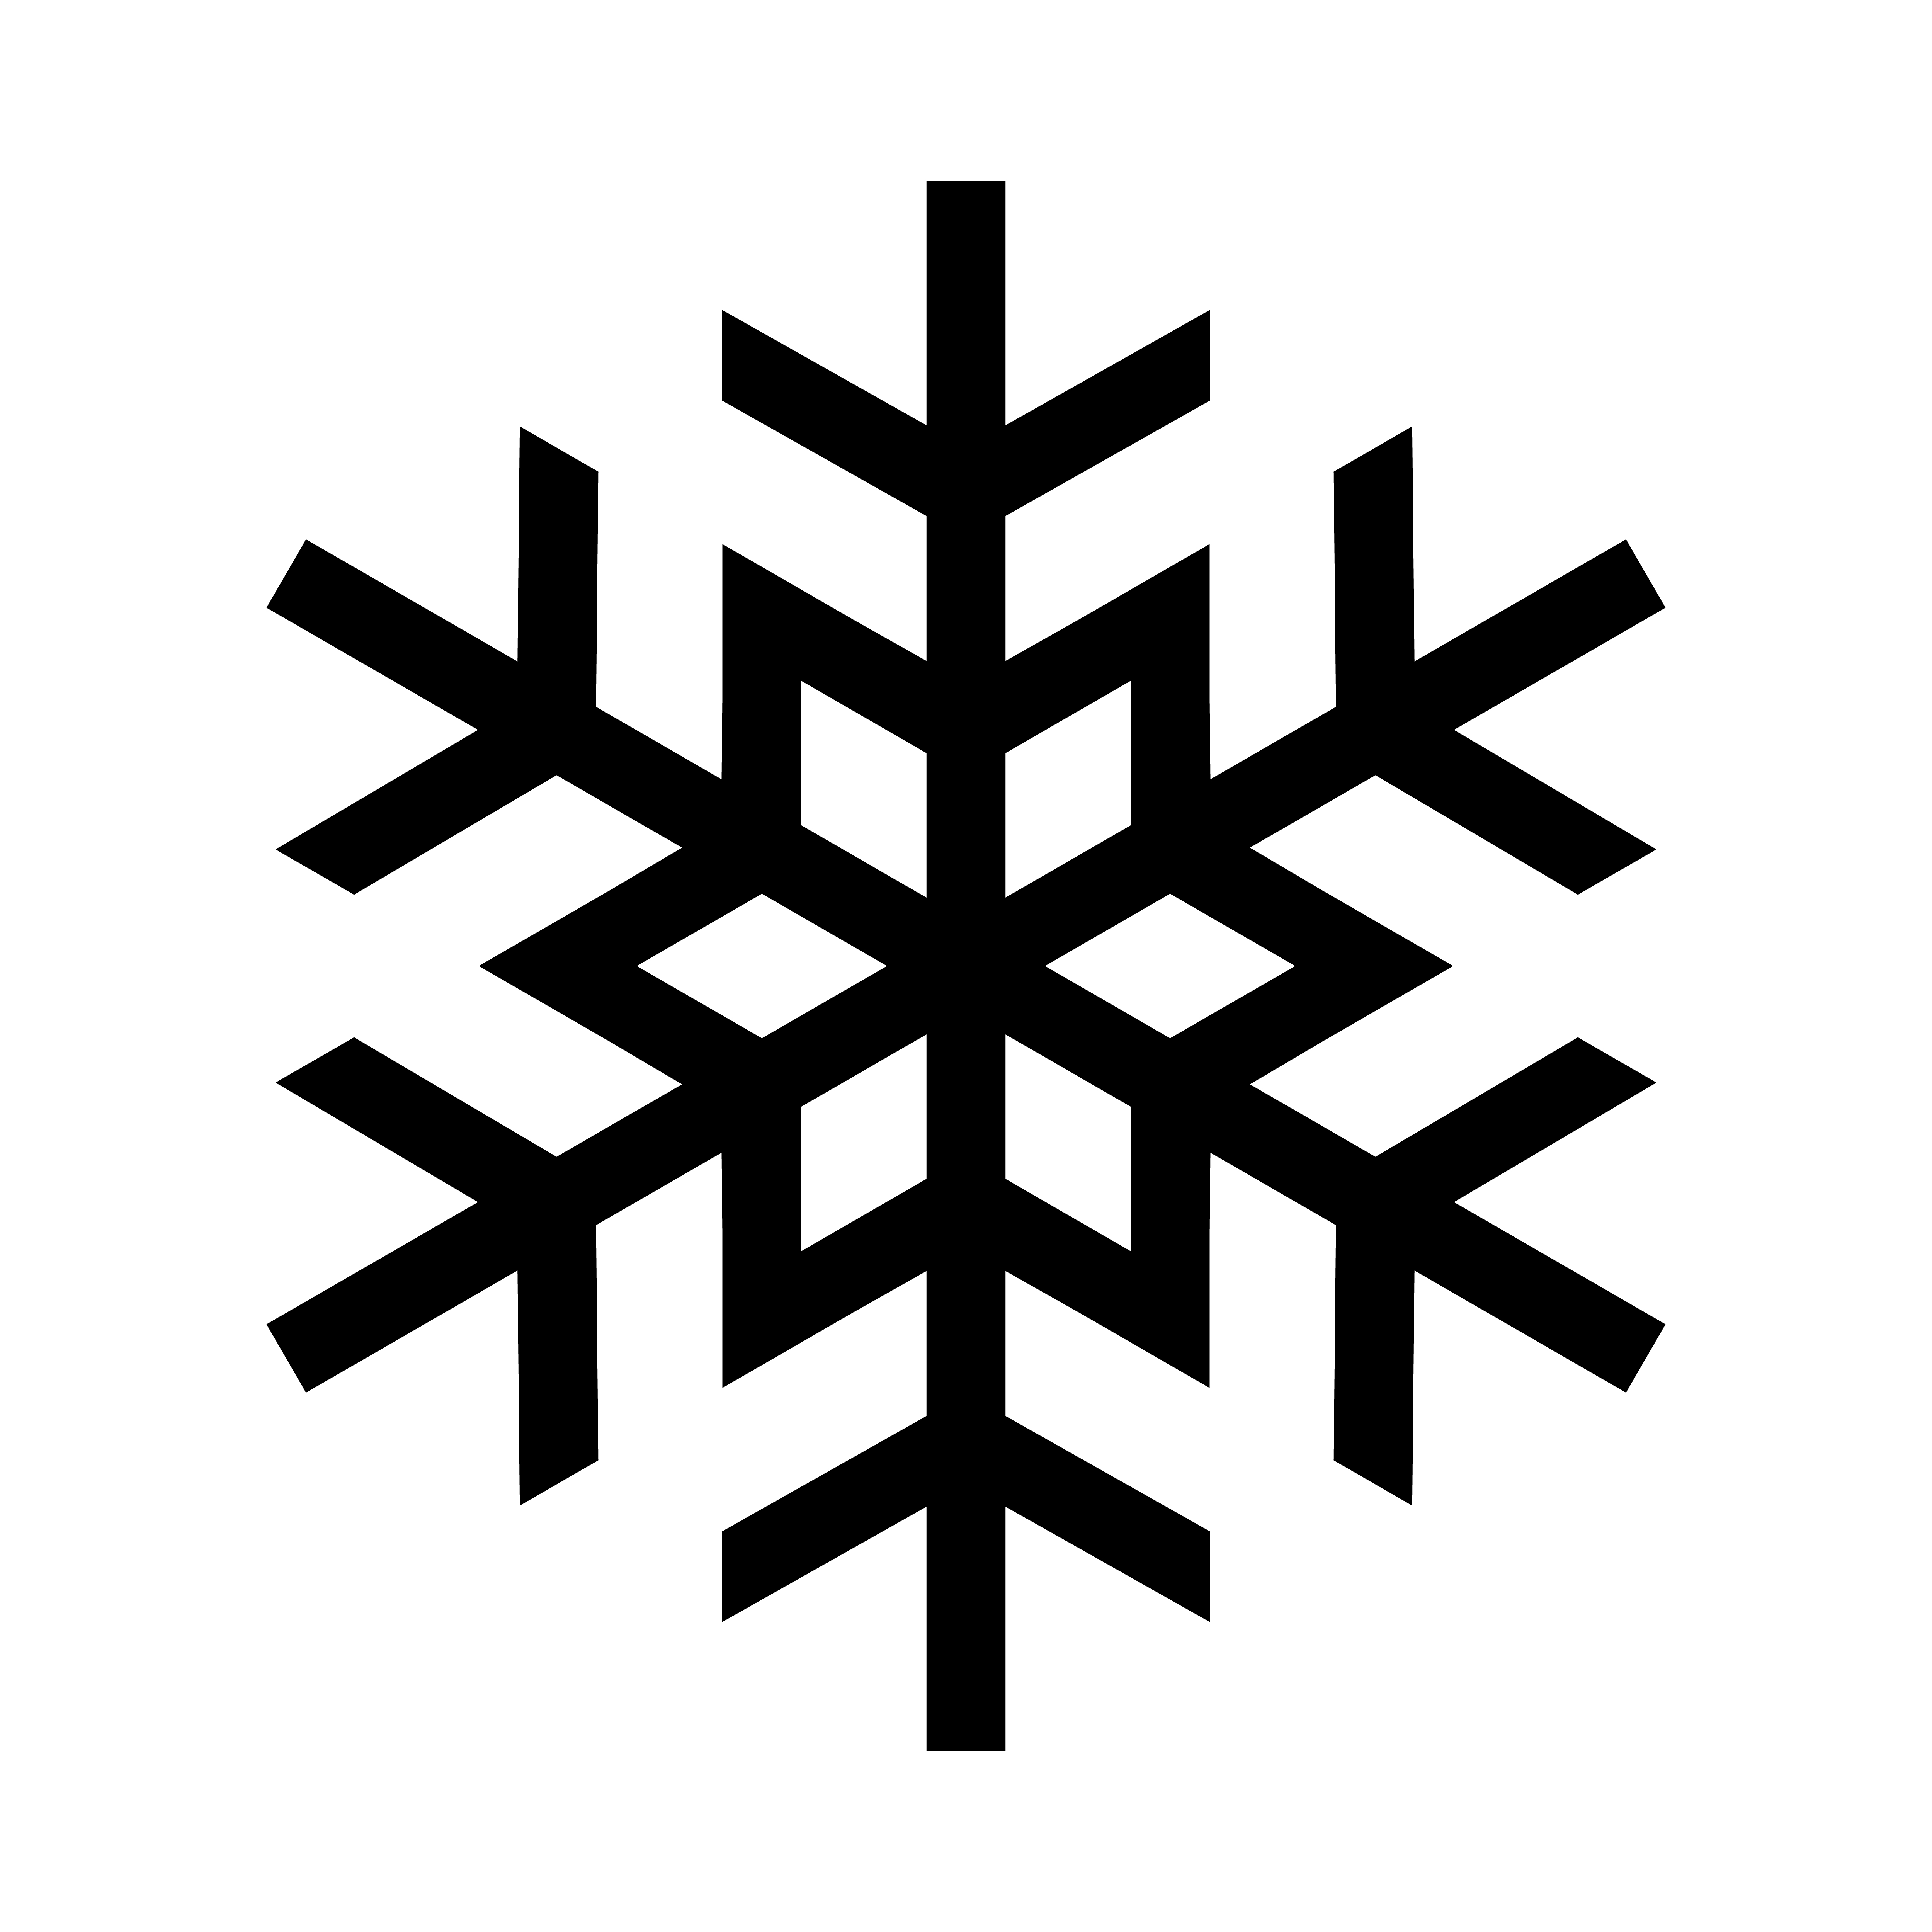 Snowflake Vector Icon 551230 - Download Free Vectors, Clipart Graphics